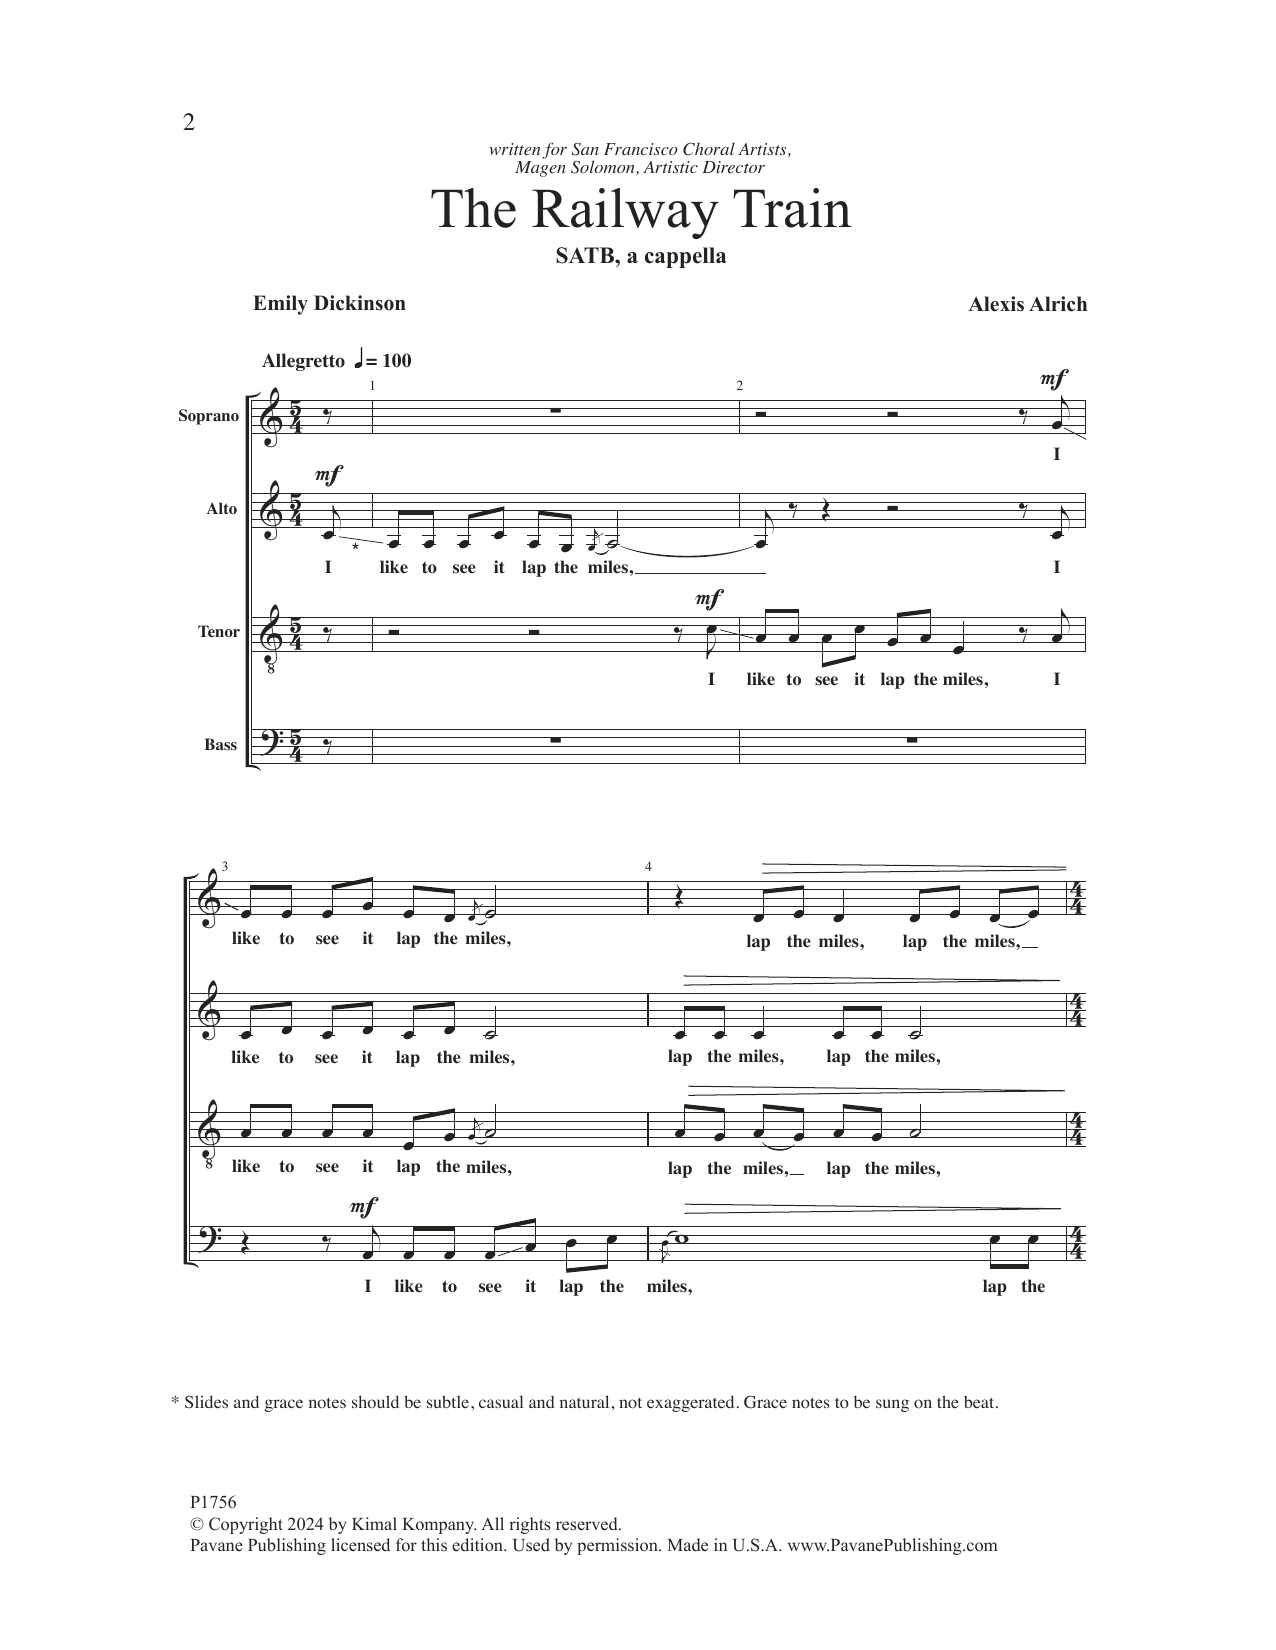 Alexis Alrich The Railway Train (arr. Loren Wiebe) Sheet Music Notes & Chords for SATB Choir - Download or Print PDF